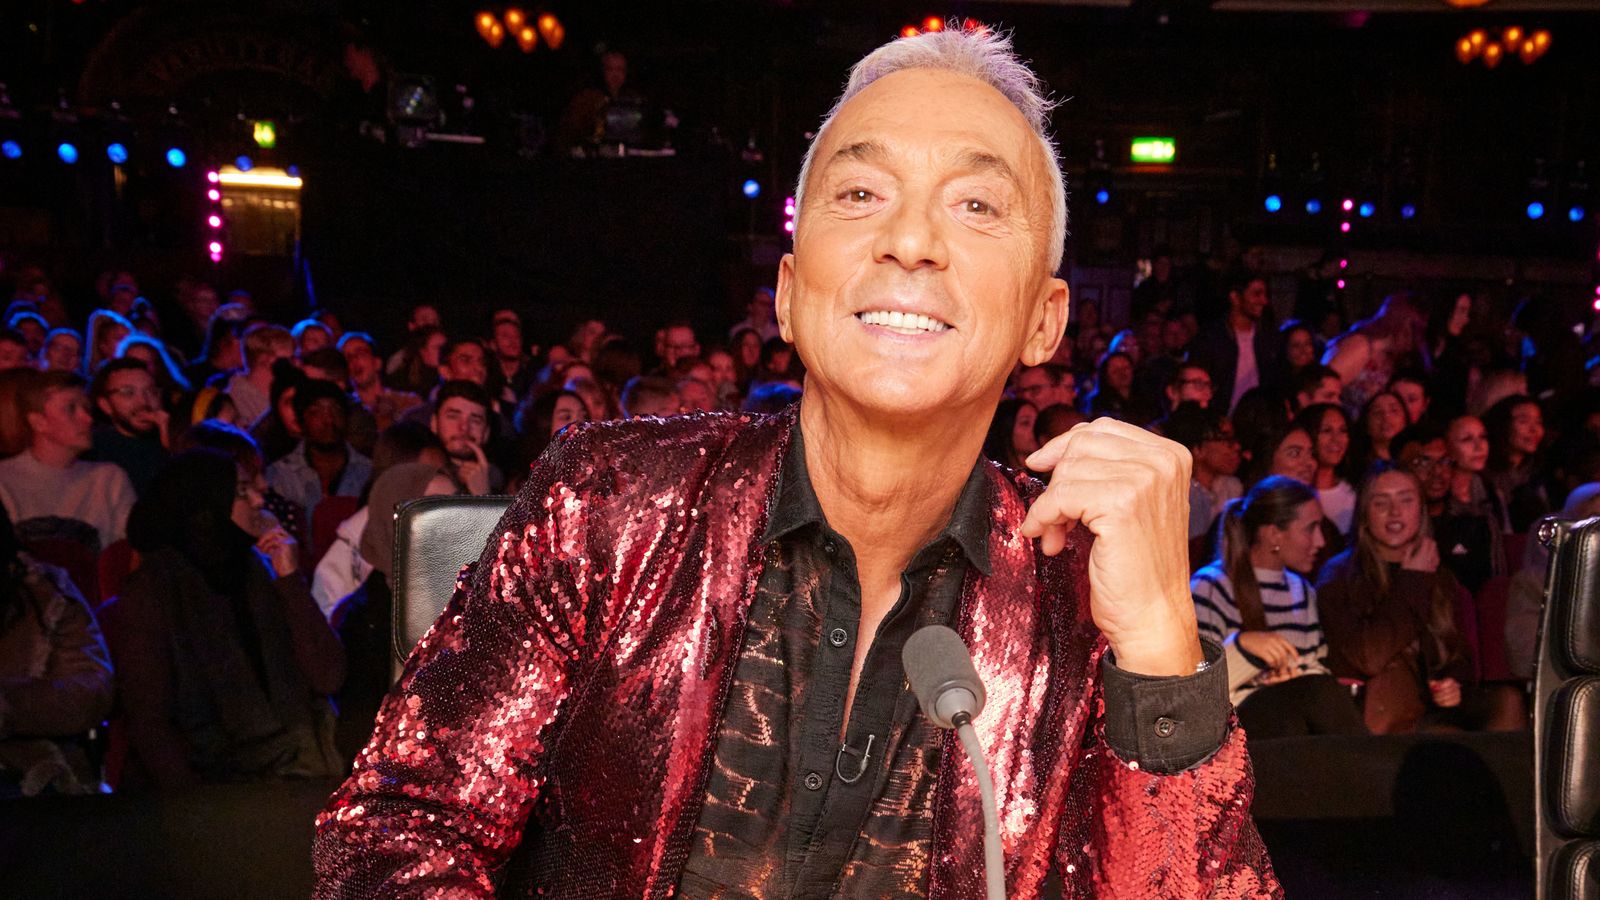 Bruno Tonioli confirmed as new Britain's Got Talent judge - replacing David Walliams